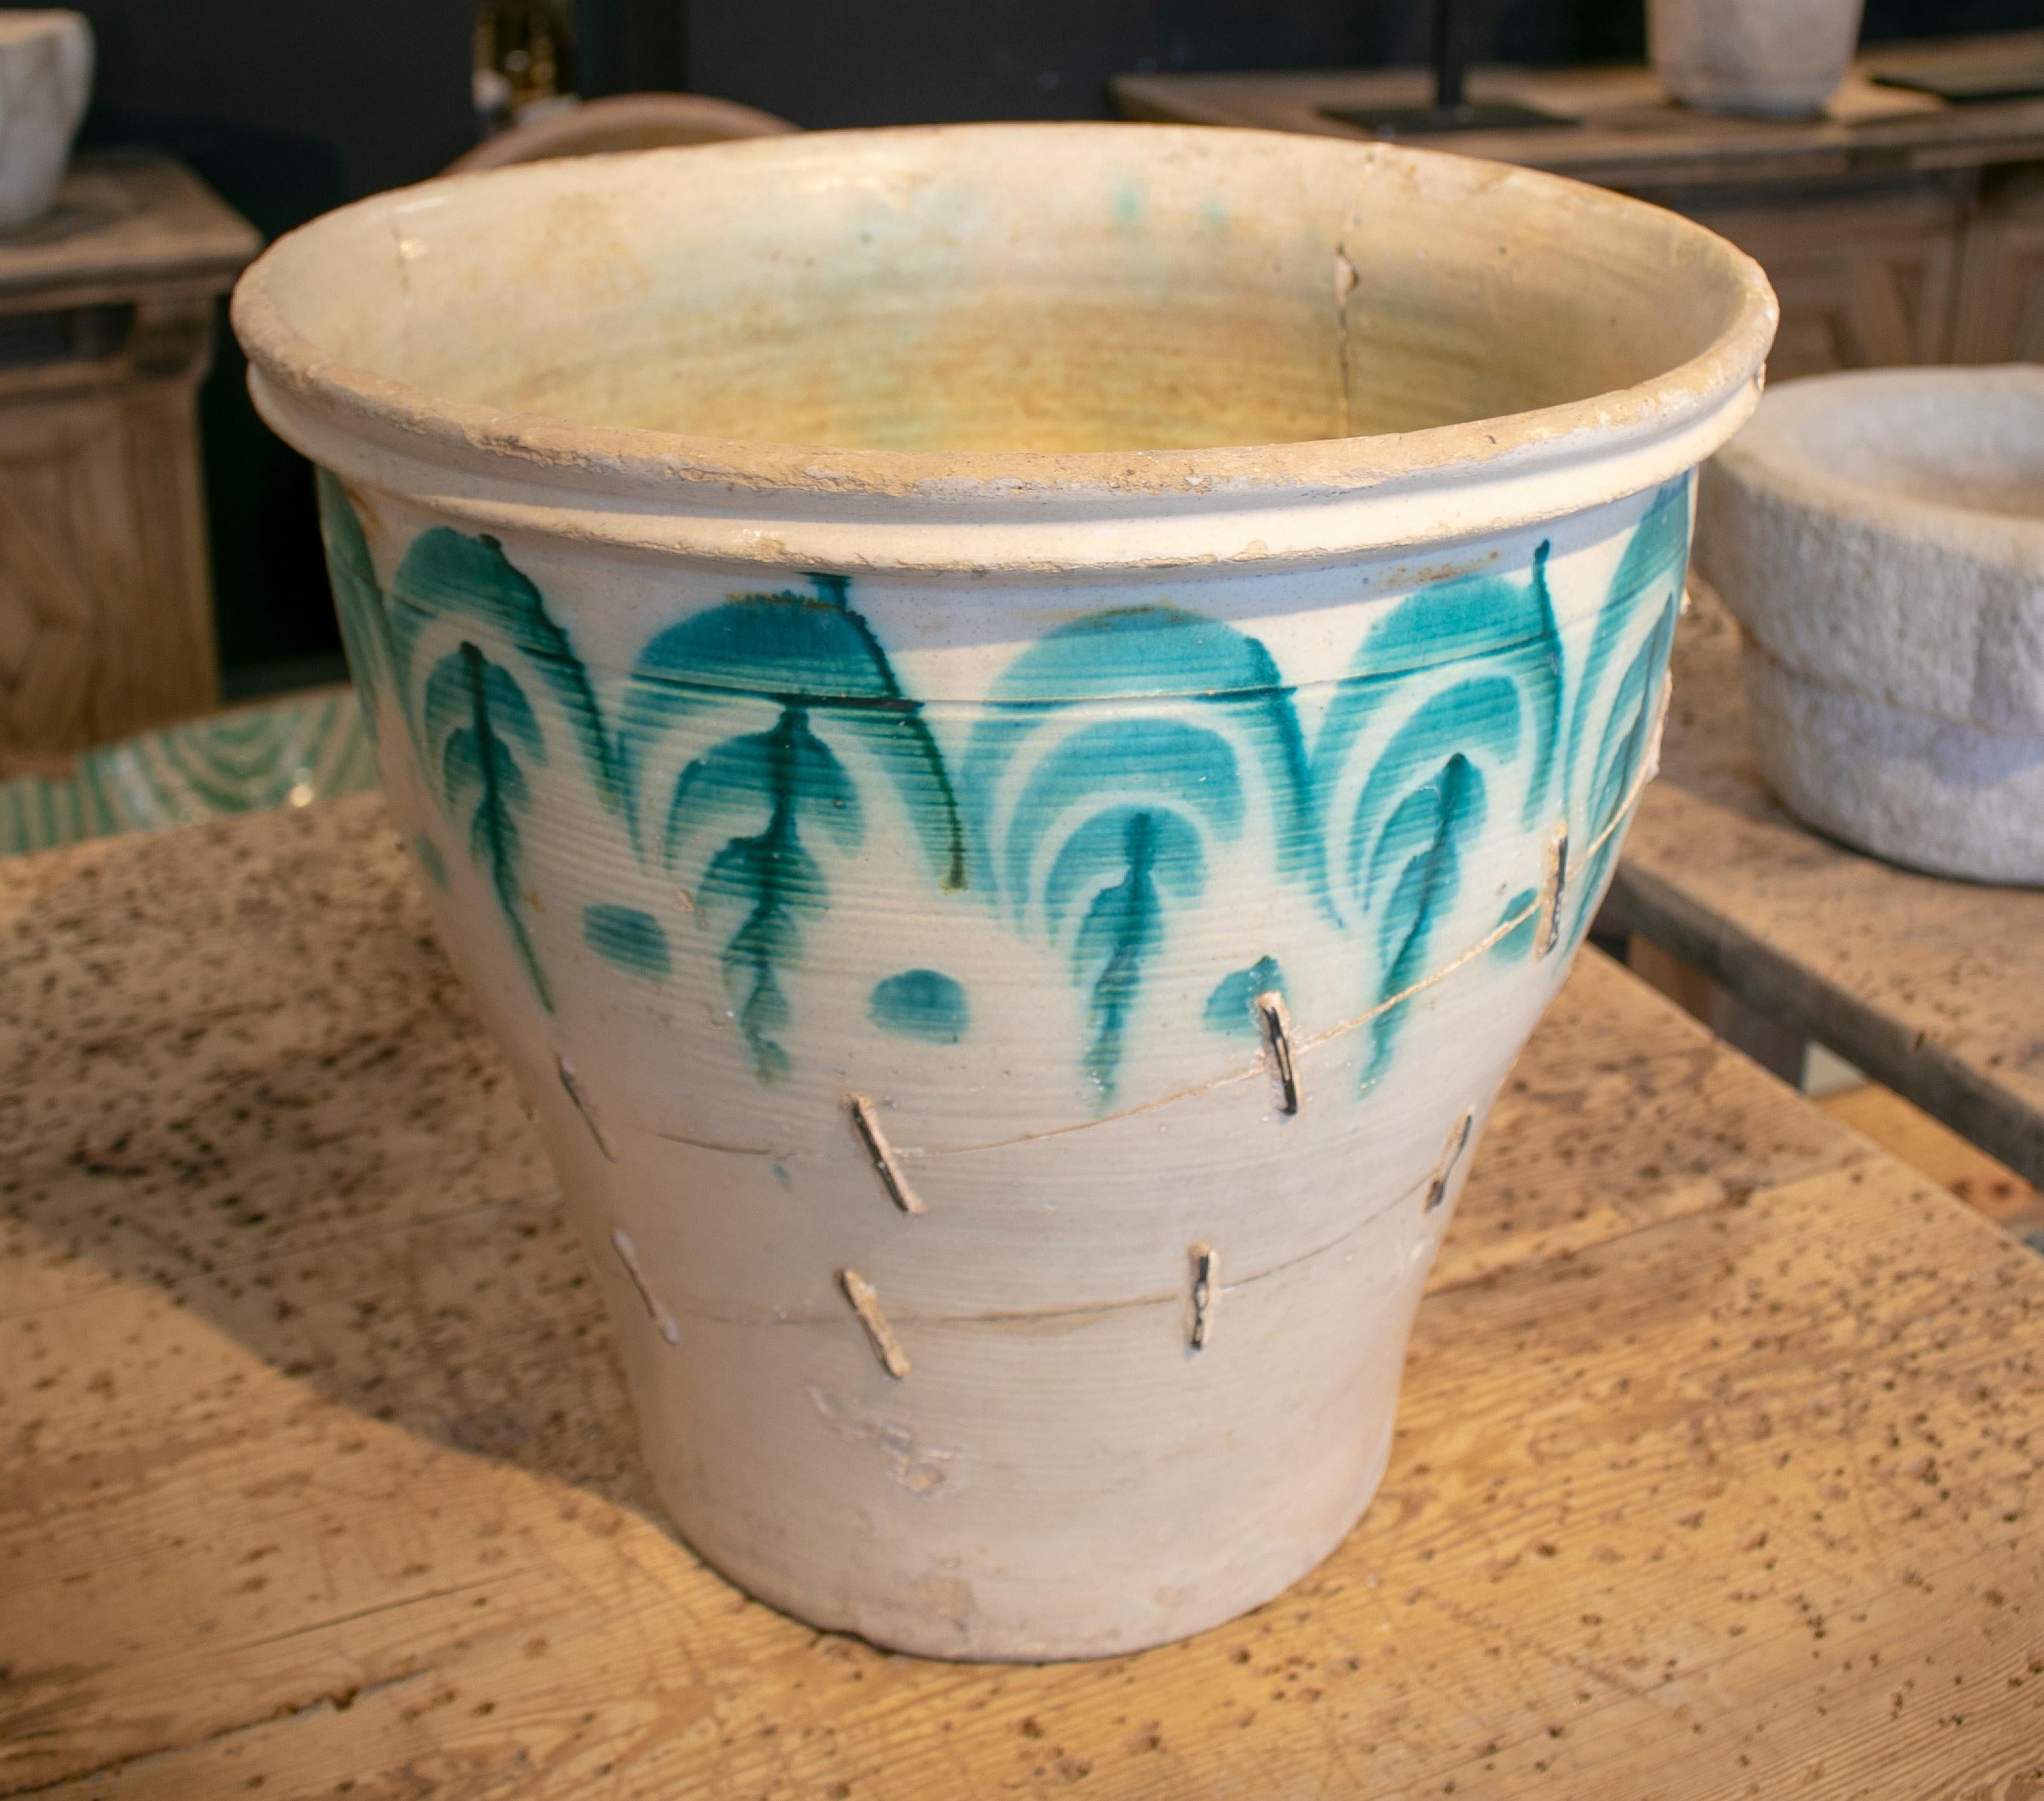 1920s Spanish Granada white and green glazed ceramic pot with iron staples.